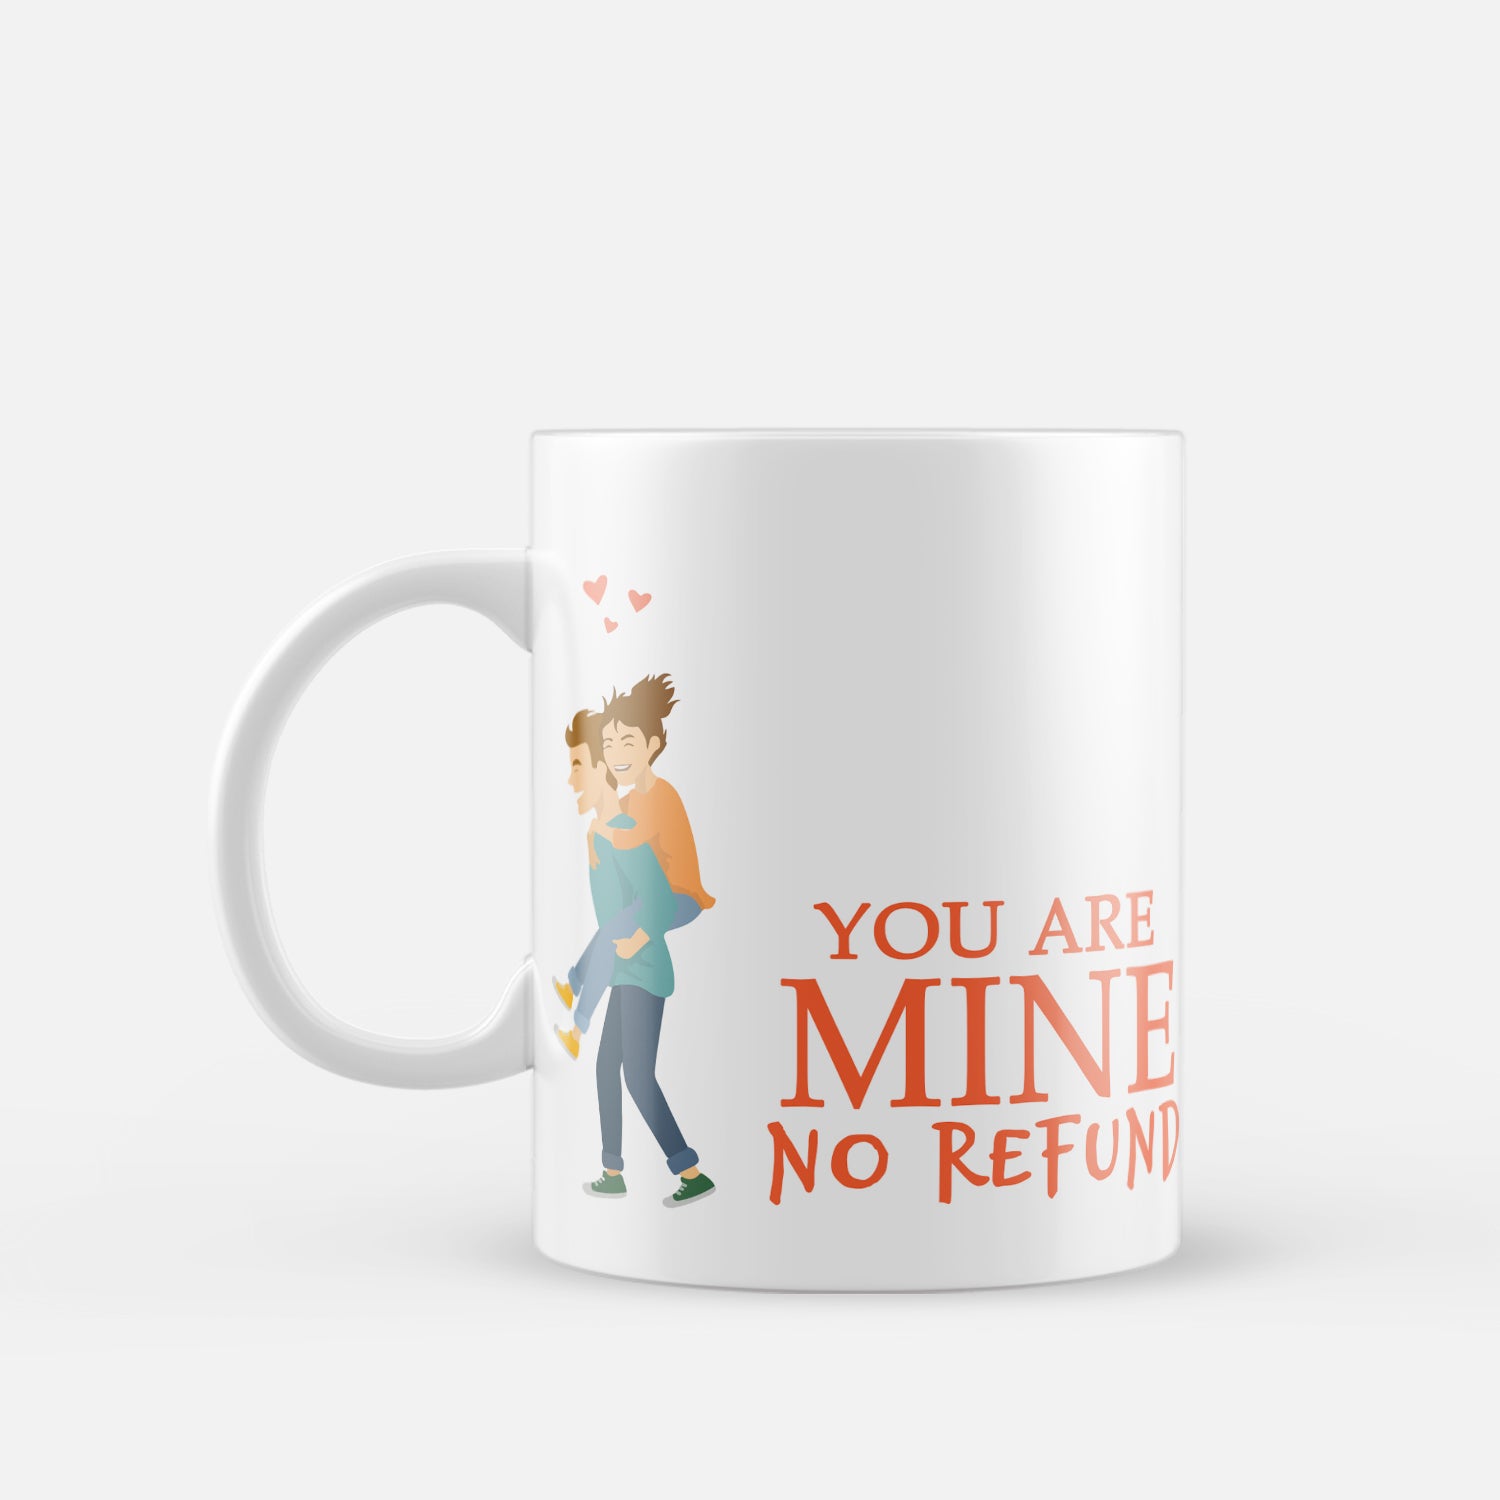 "You are mine No refund" Valentine Love theme Ceramic Coffee Mug 2